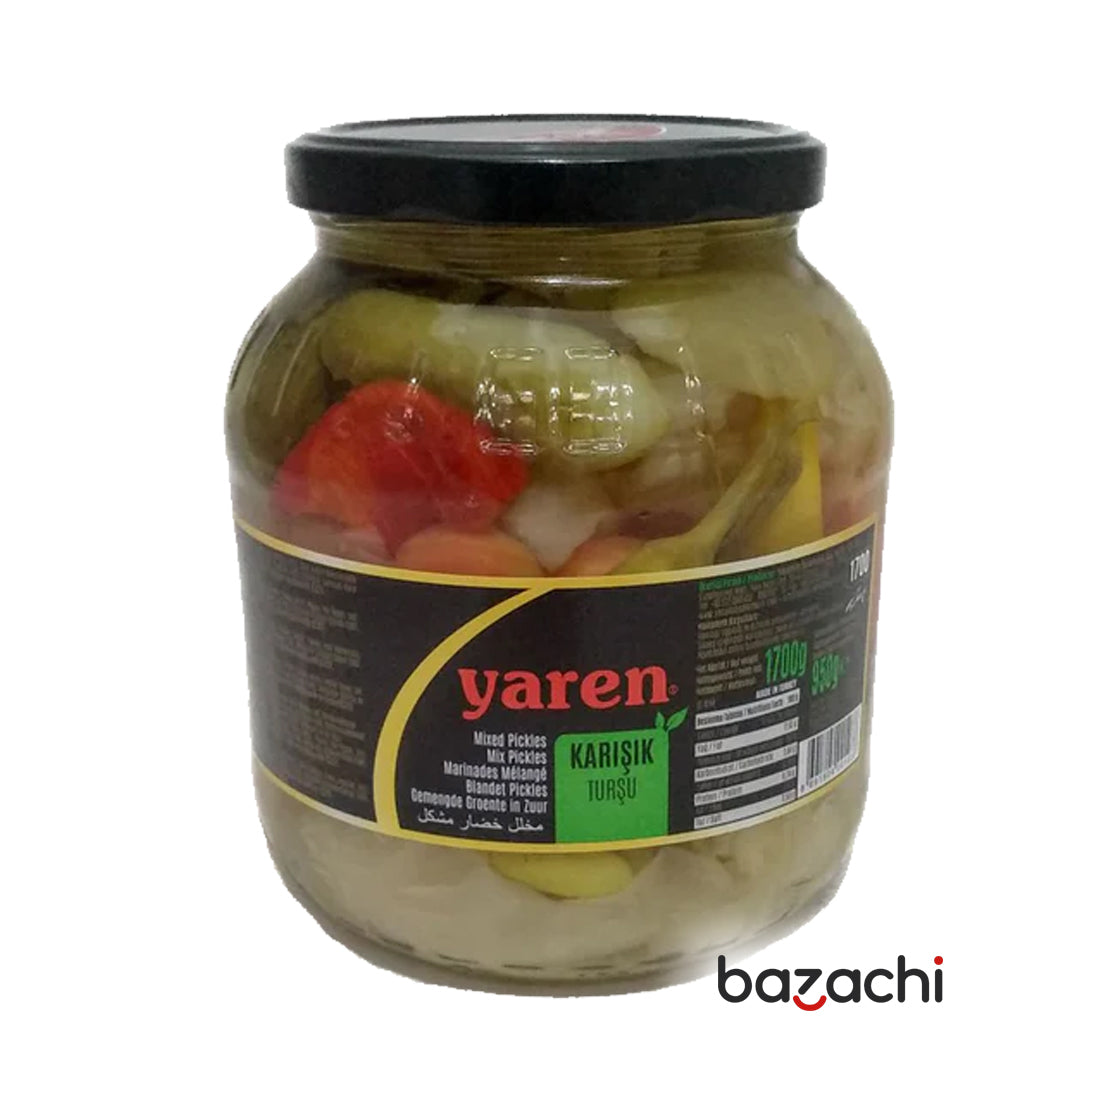 Yaren Mixed Pickles  1700g -Karisik Tursu